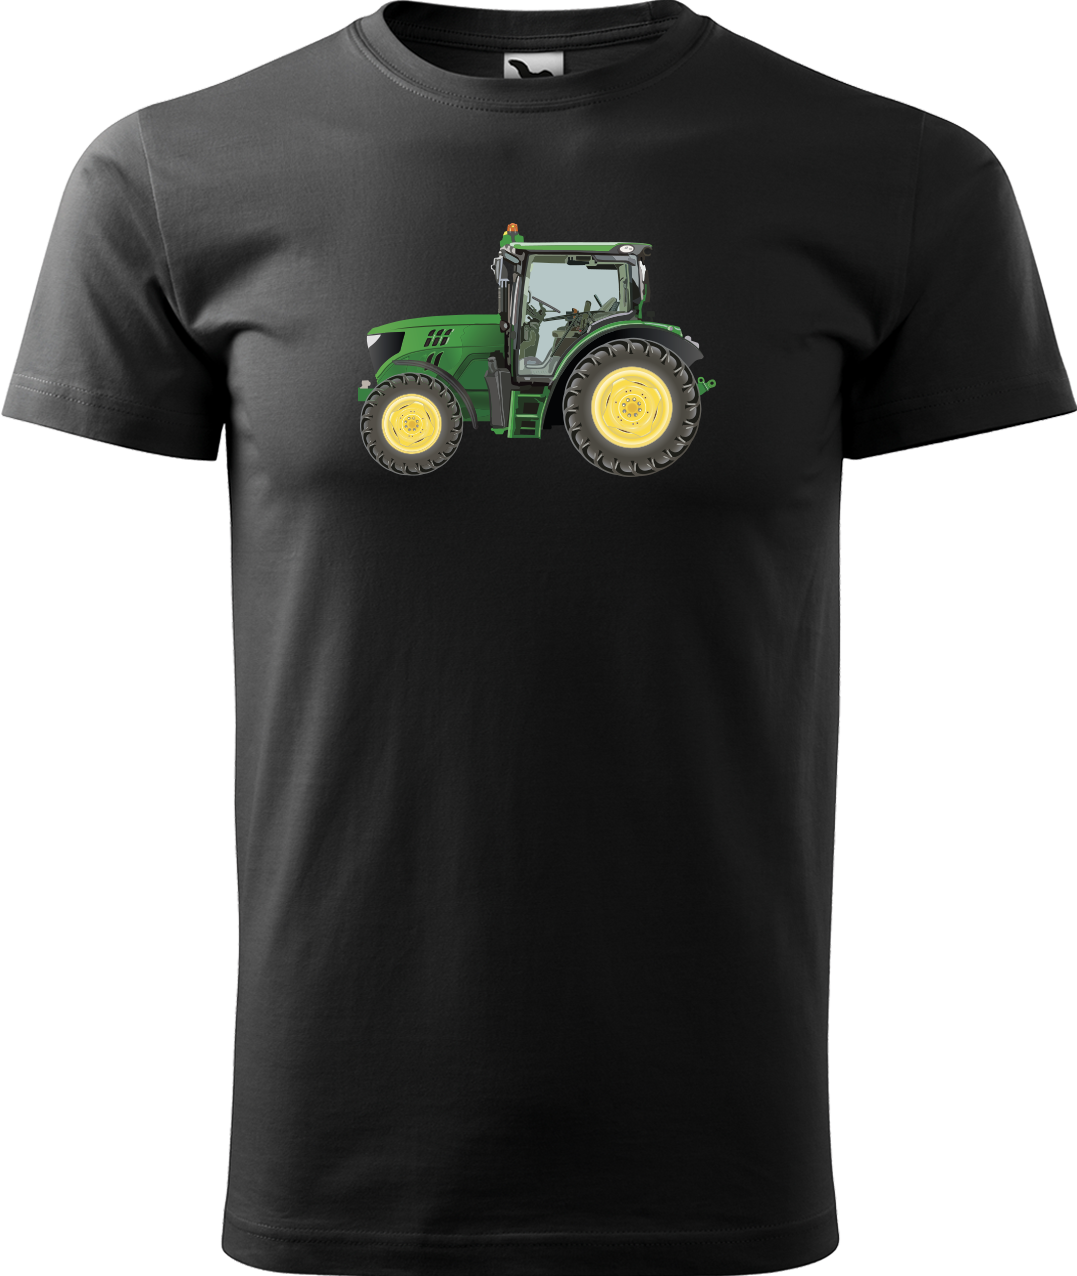 Tričko s traktorem - Zelený traktor Velikost: 2XL, Barva: Černá (01)